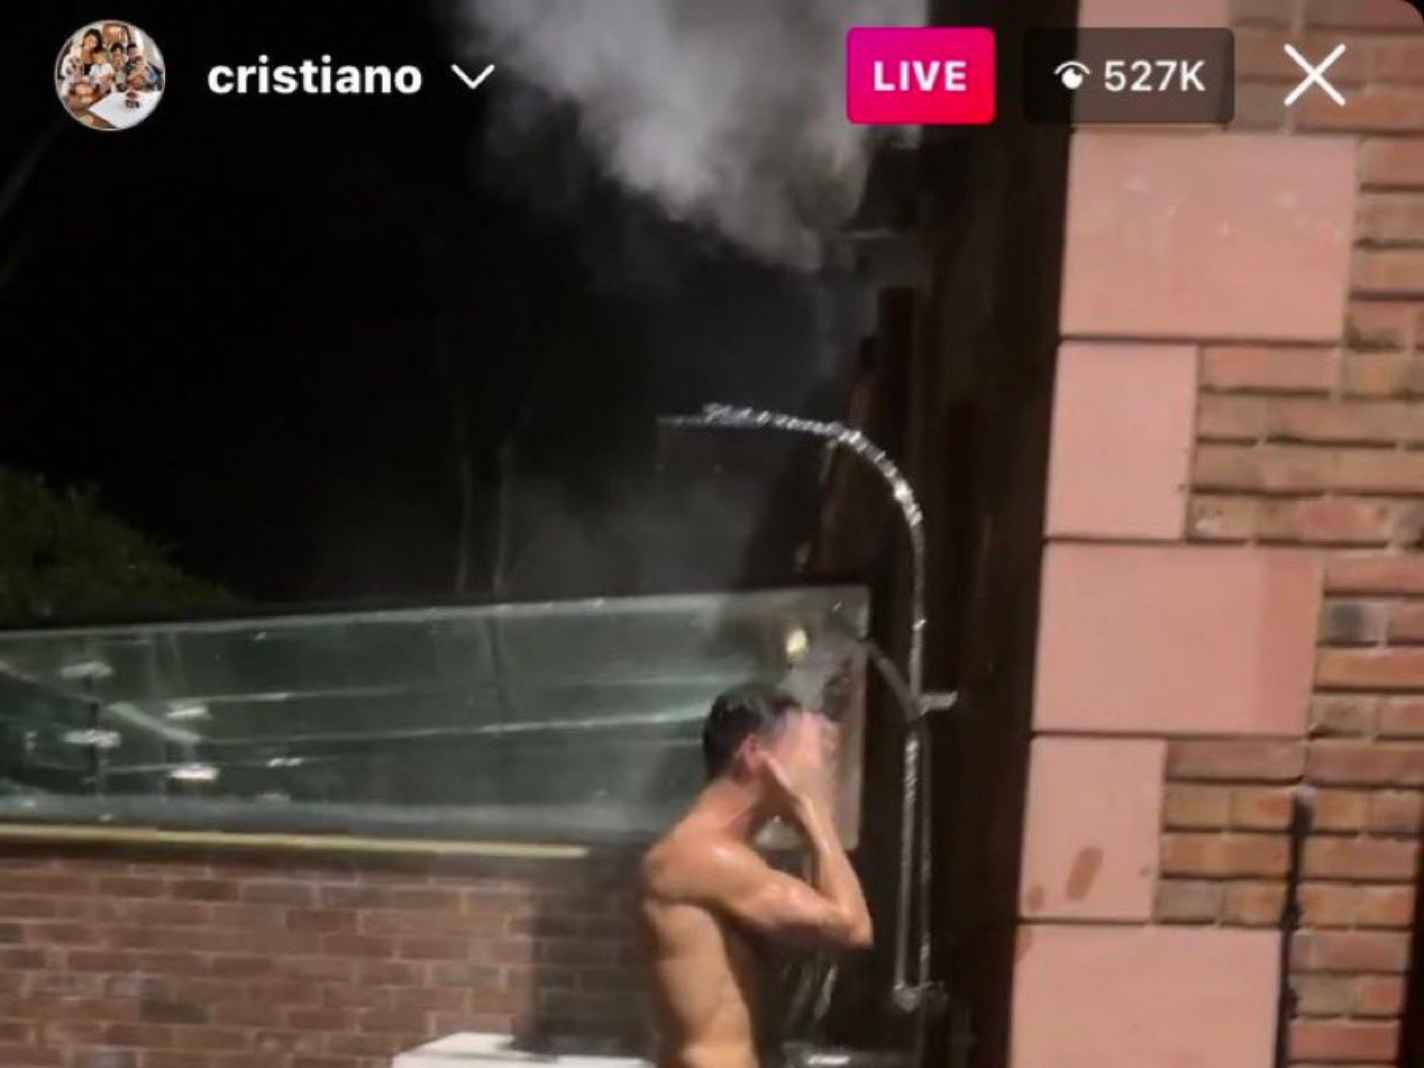 Photo – Cristiano Ronaldo pulls down pants in highly irregular Instagram Live